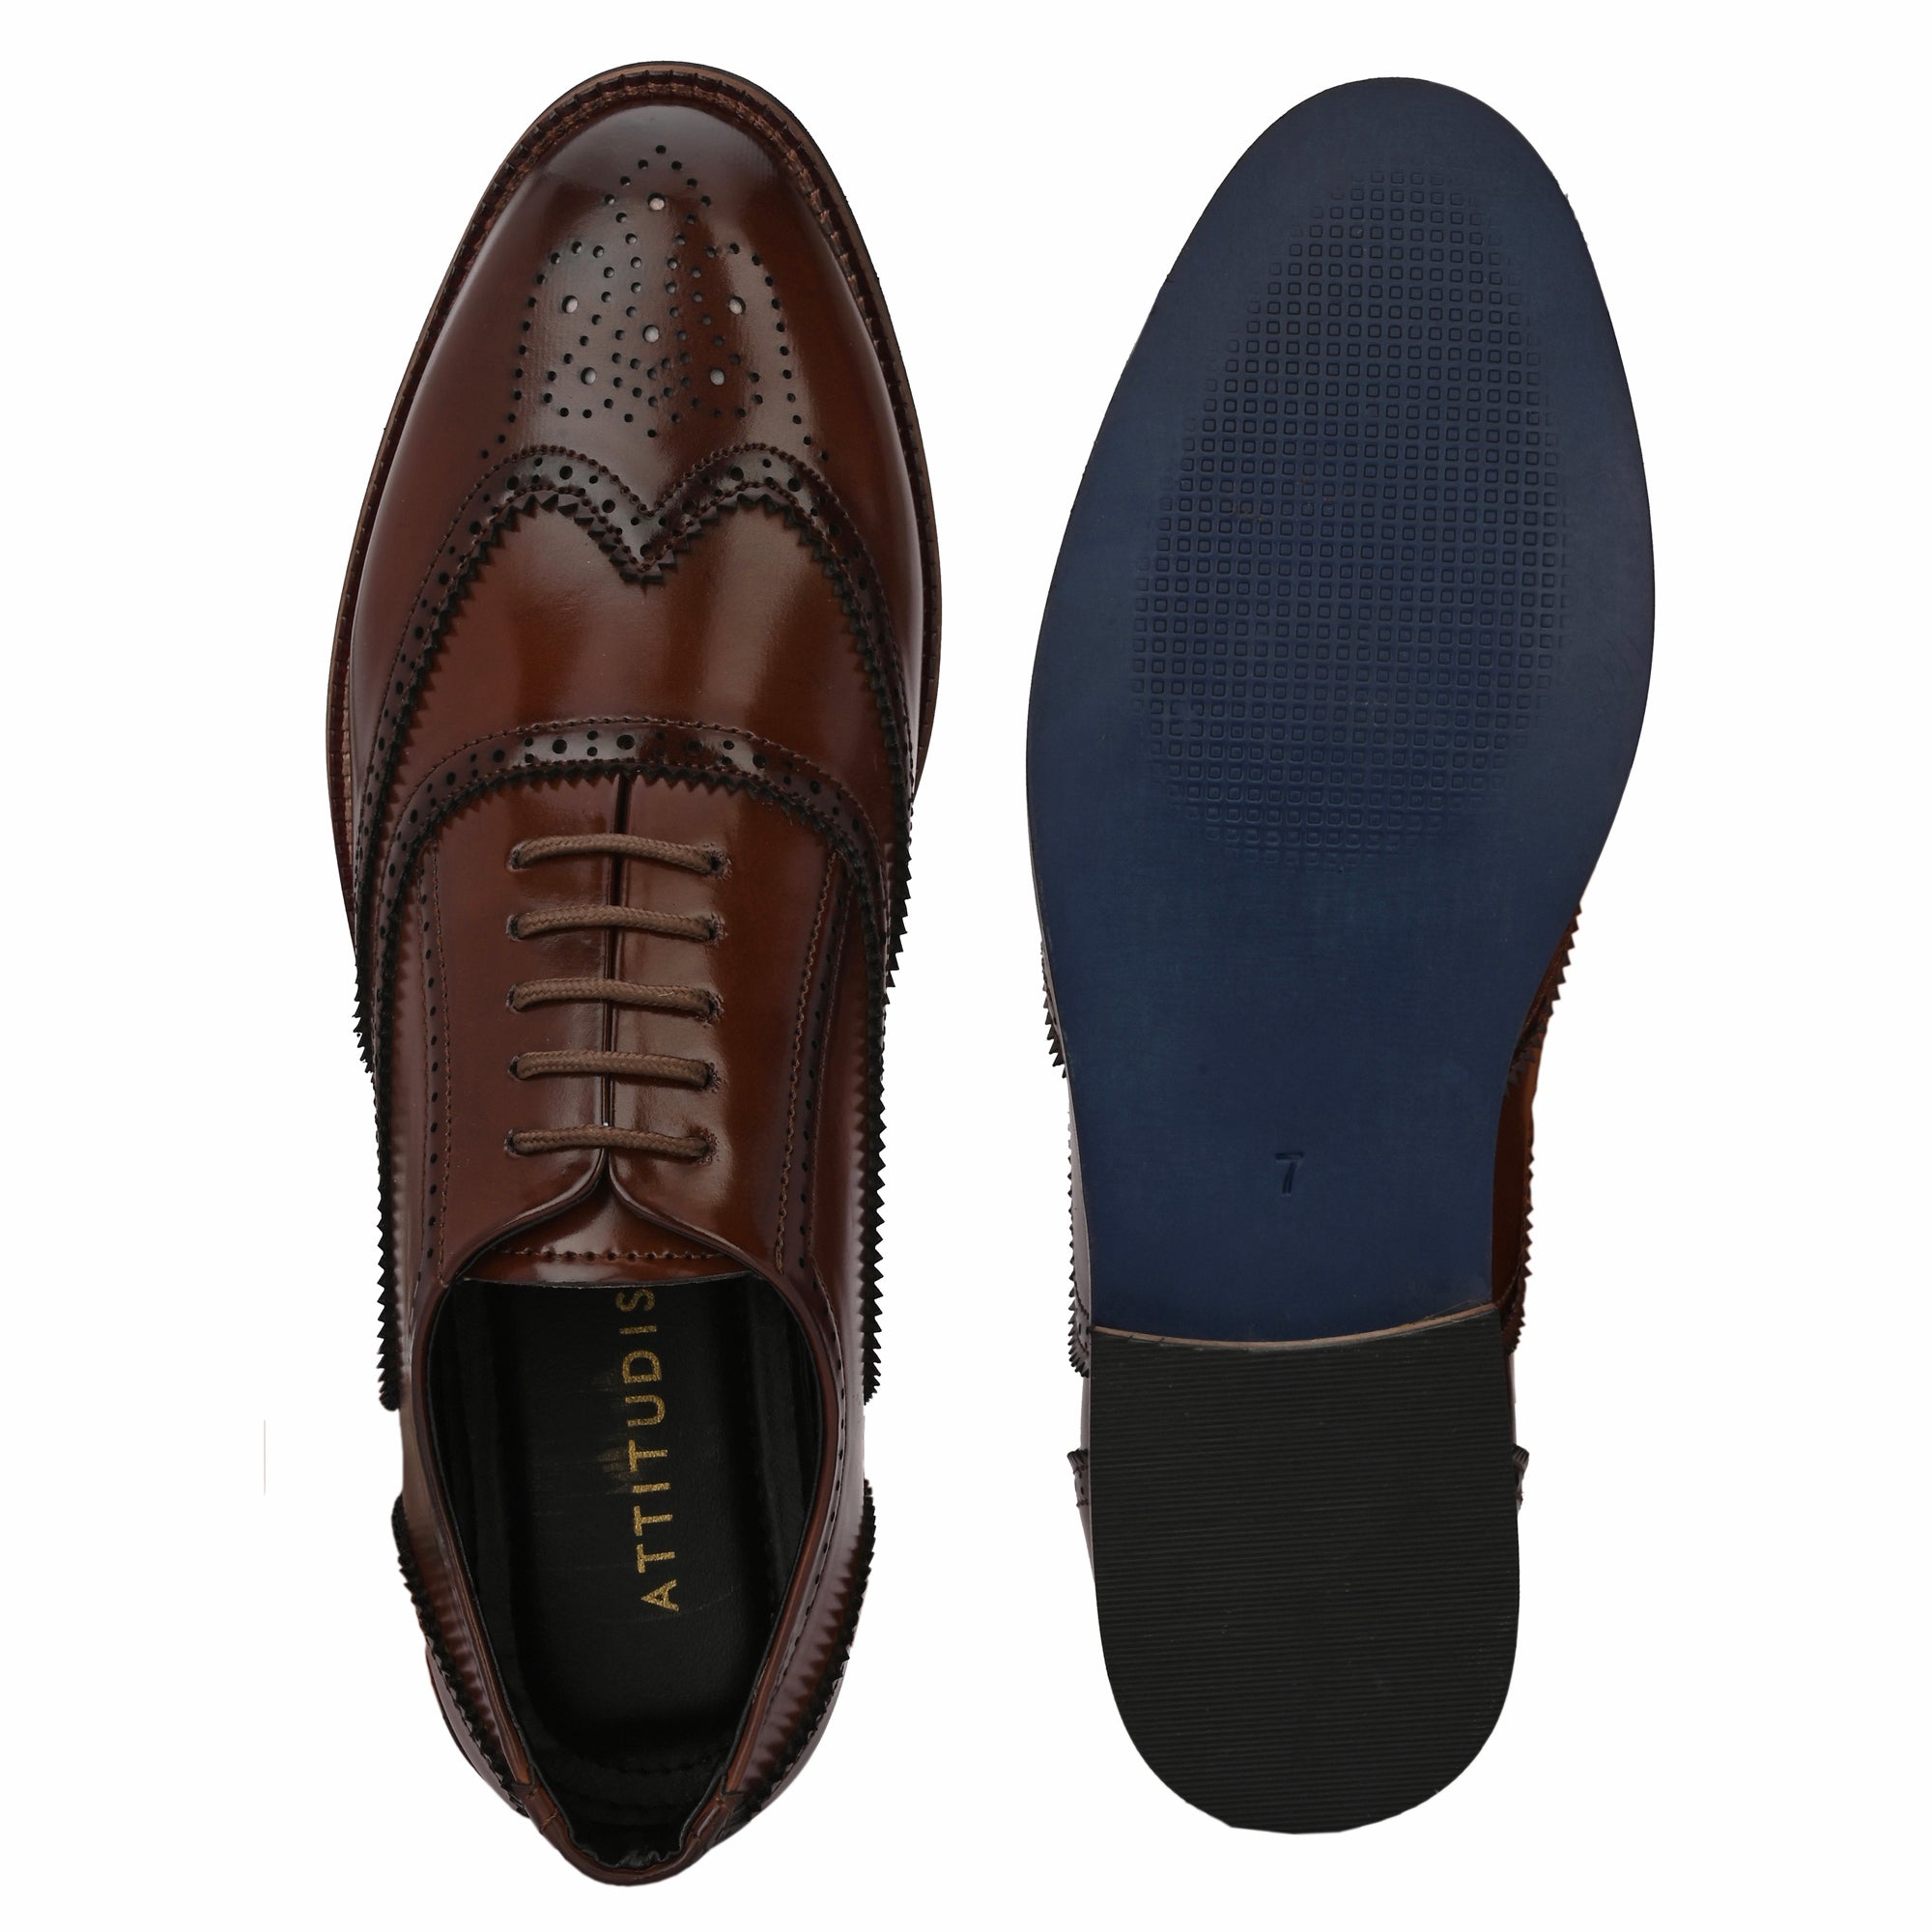 attitudist-brown-wing-tip-formal-lace-up-brouge-shoes-for-men